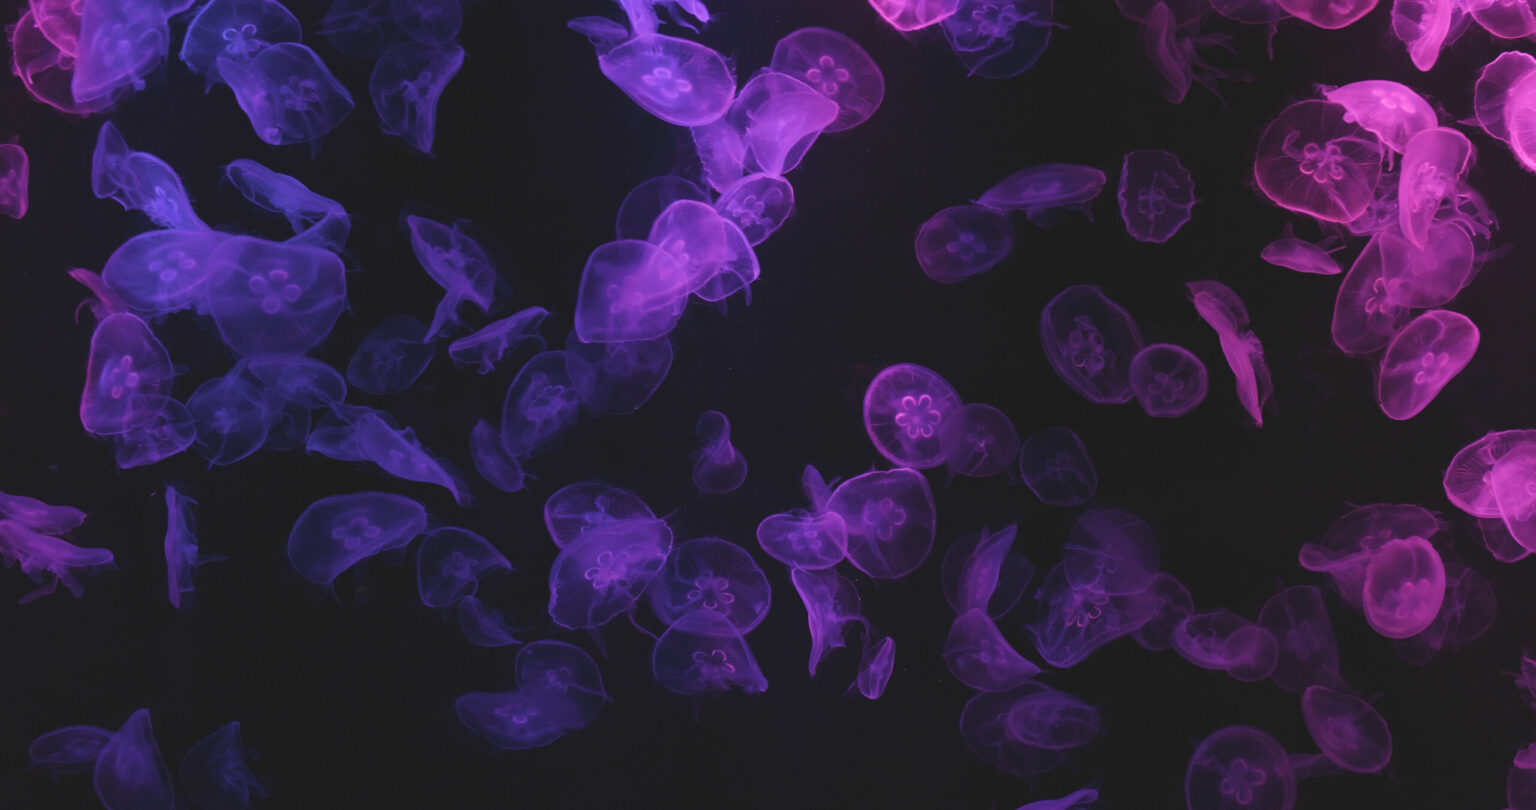 Moon Jellyfish Anatomy: 10 Amazing Fun Facts